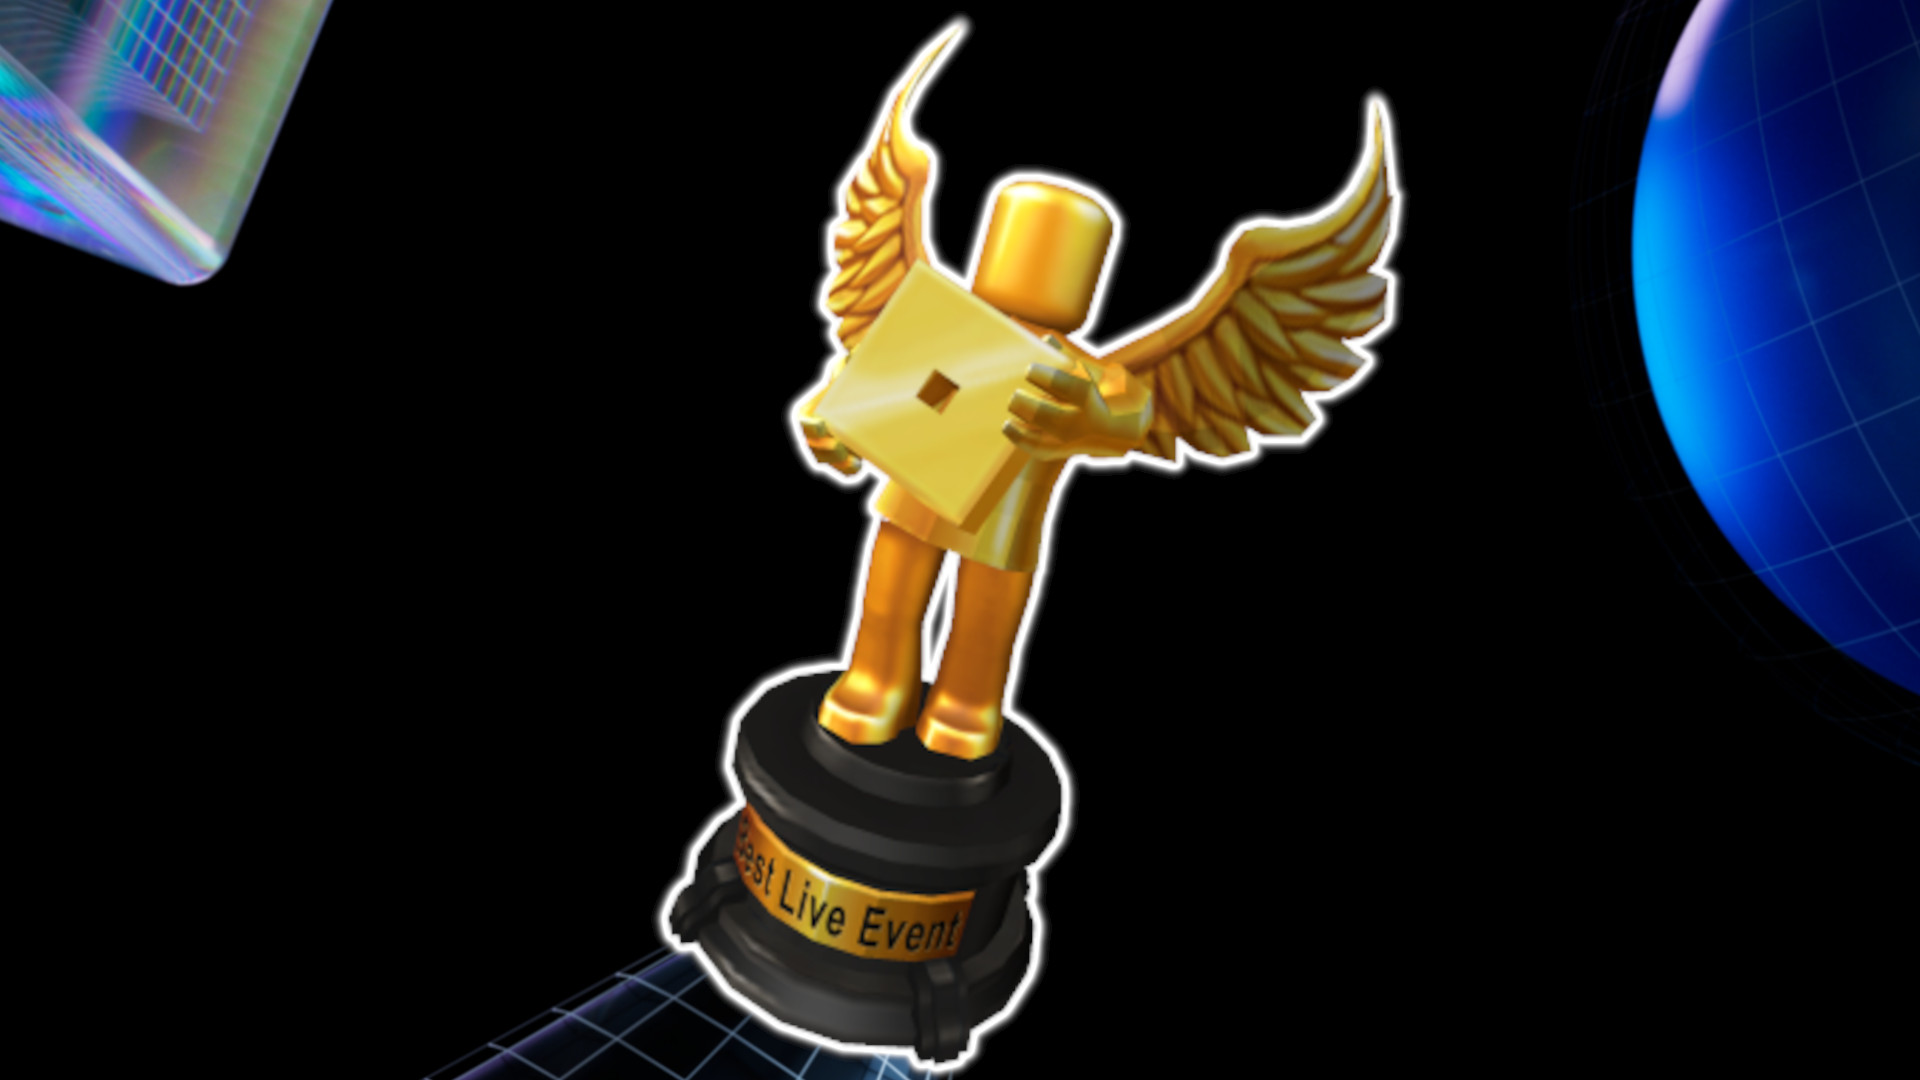 Roblox innovation awards - 2022 - Big Game Bears